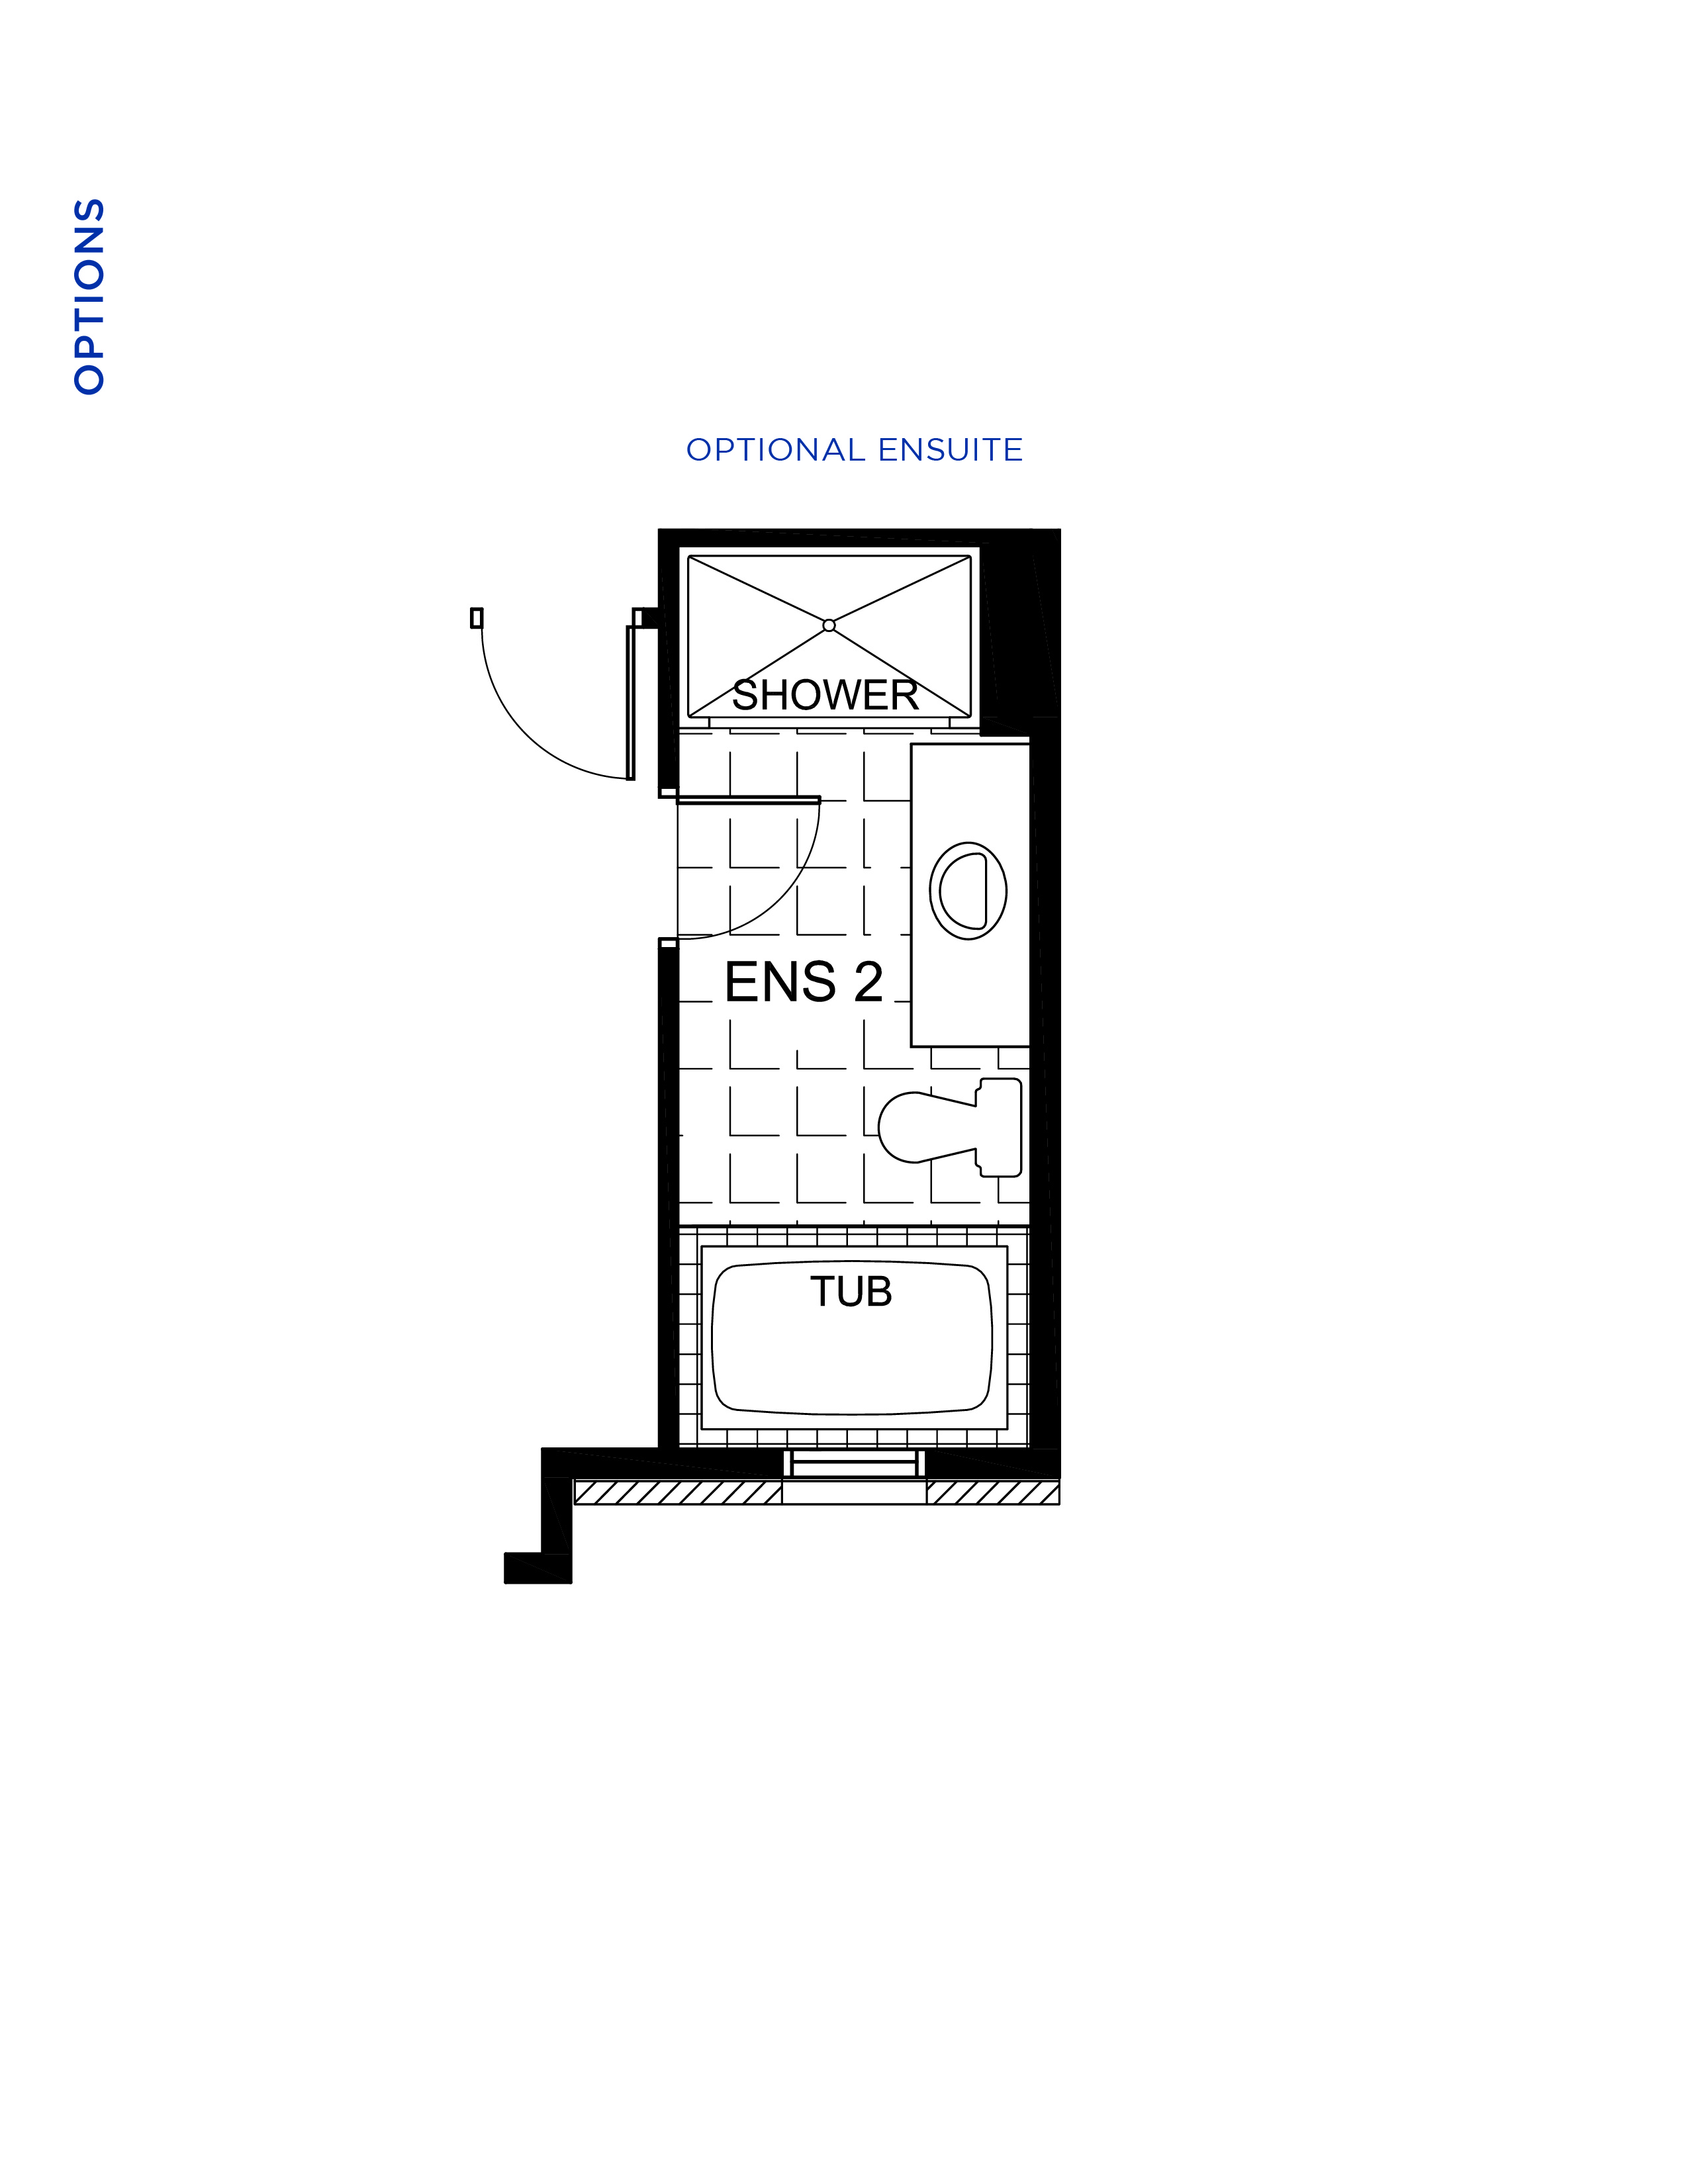 Floorplan Options - Pothos